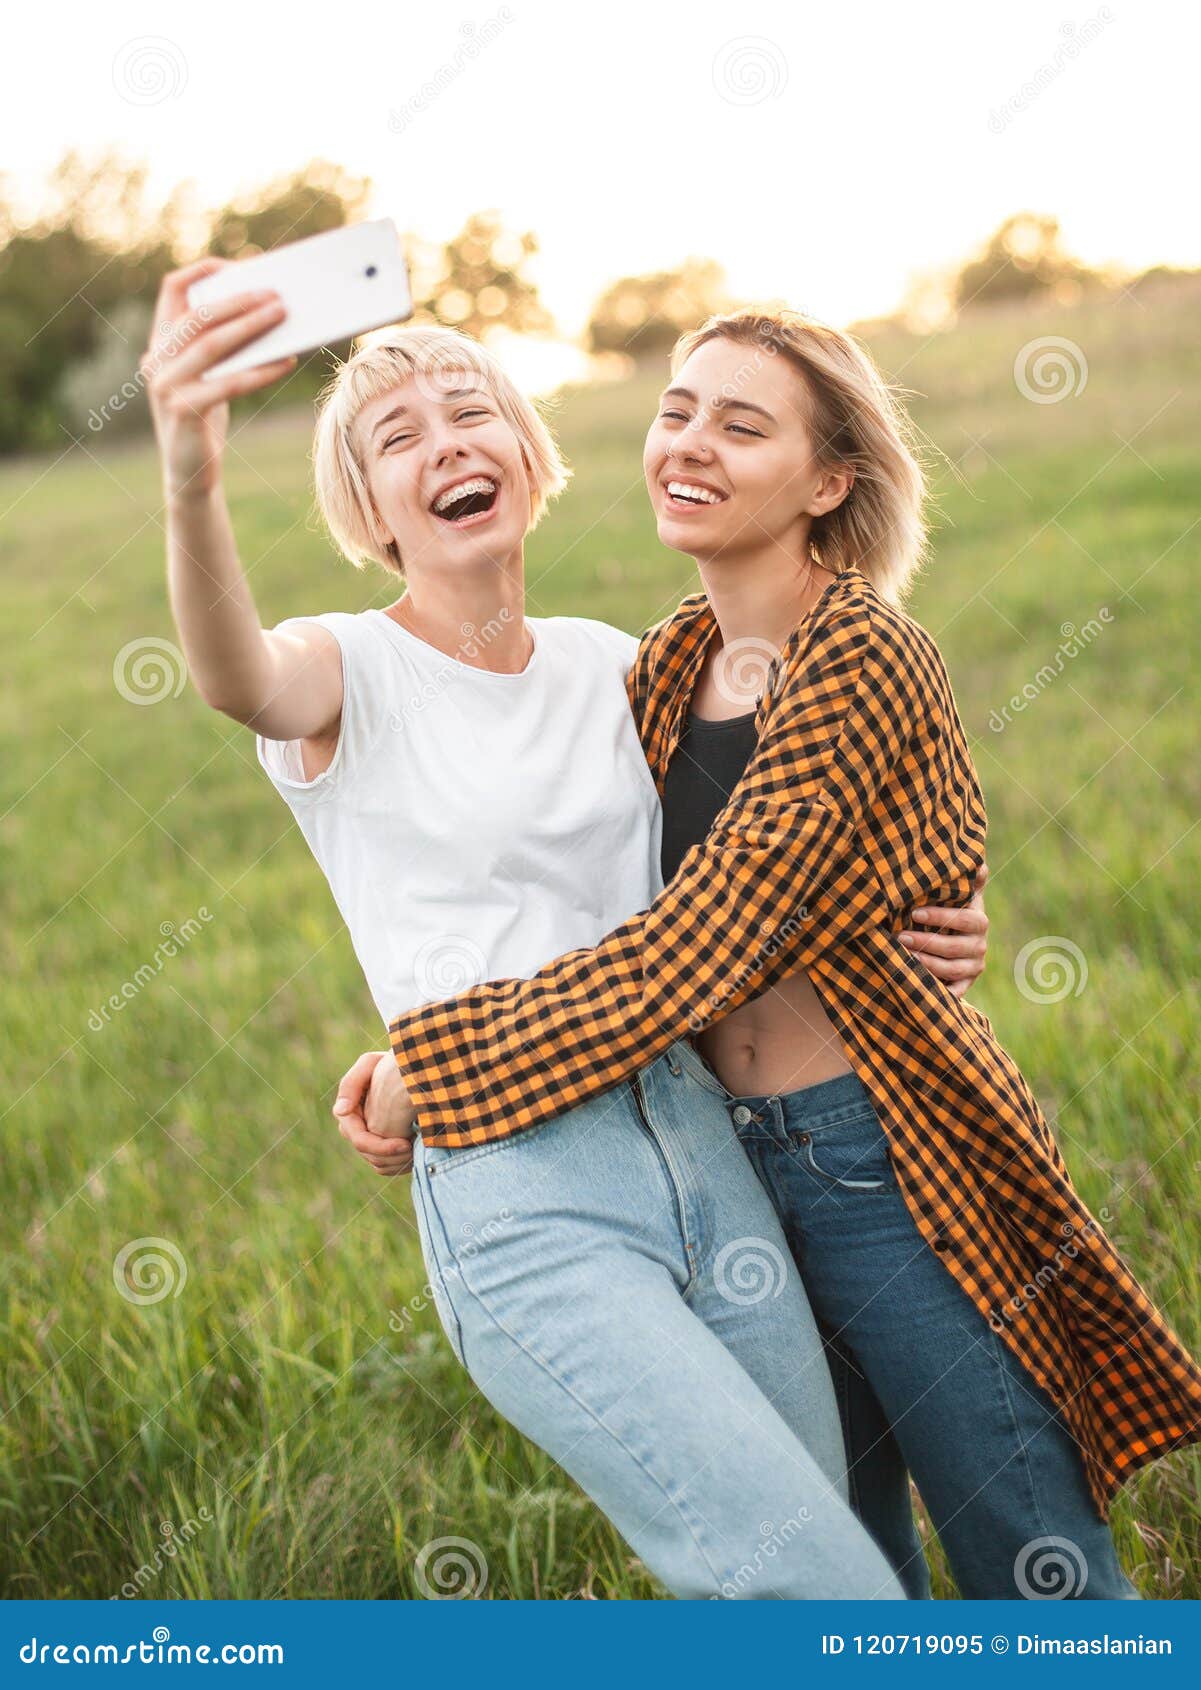 two girls taking selfie outdoors